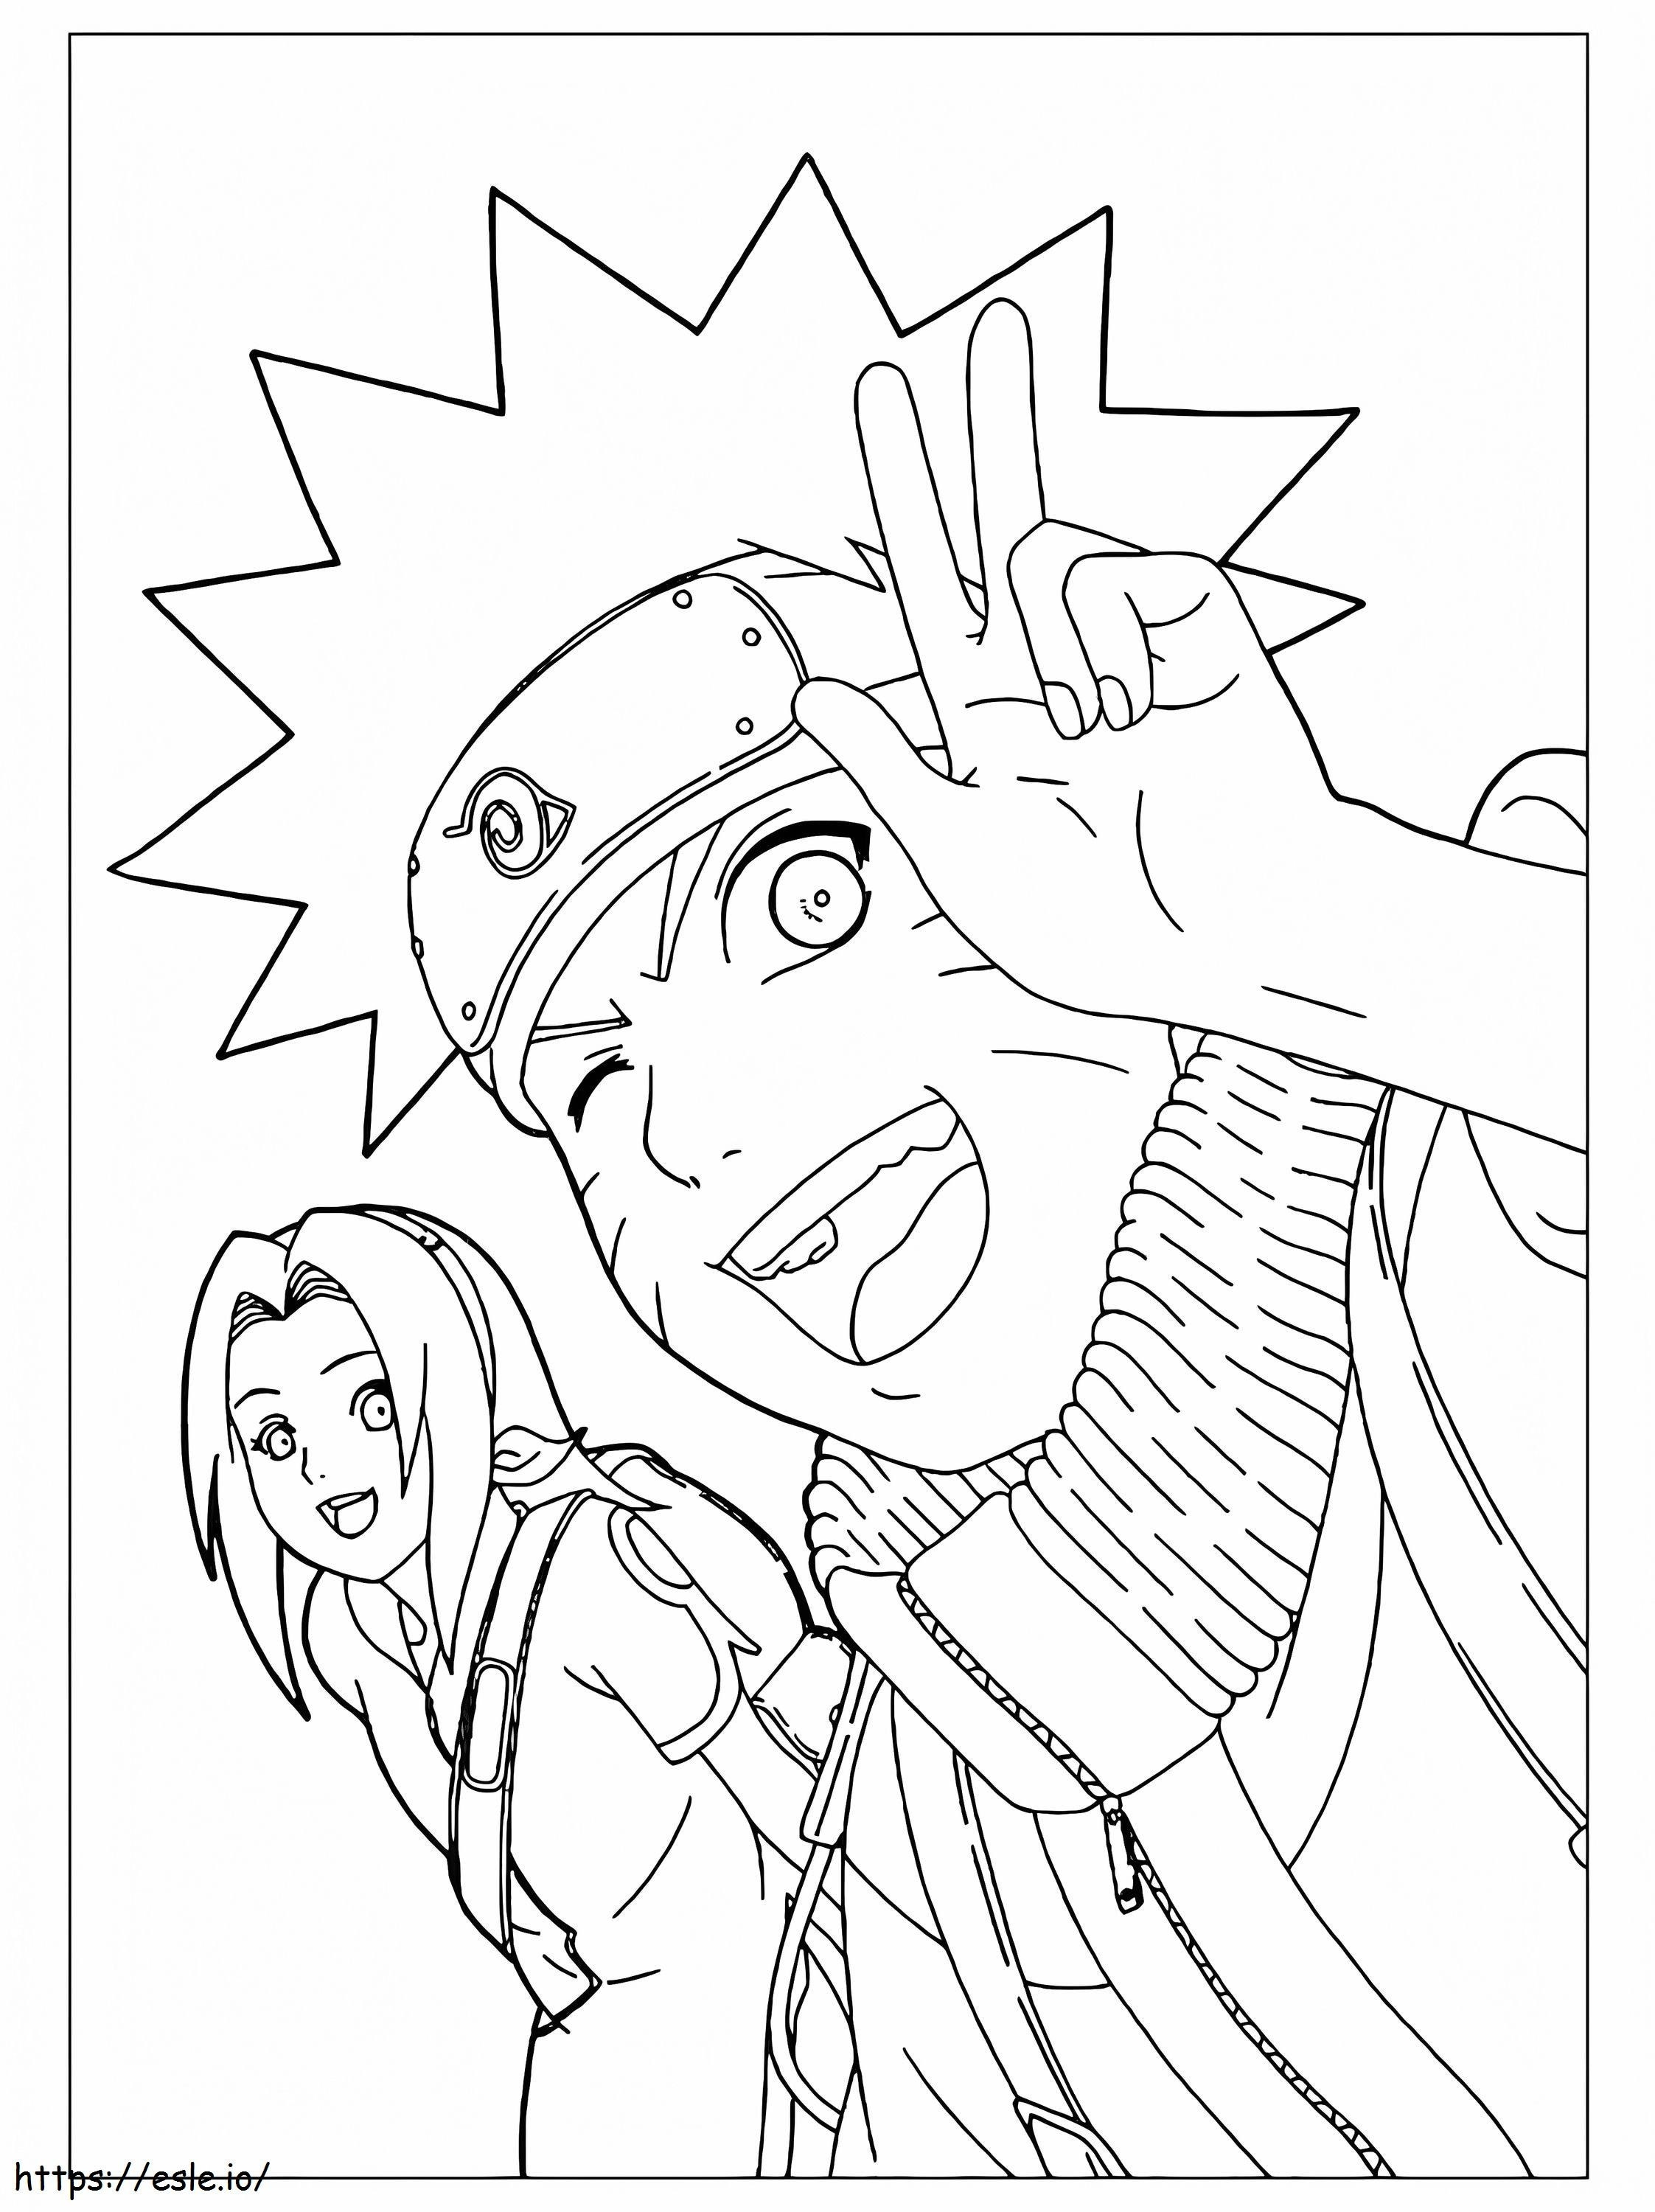 Naruto Et Sakura coloring page